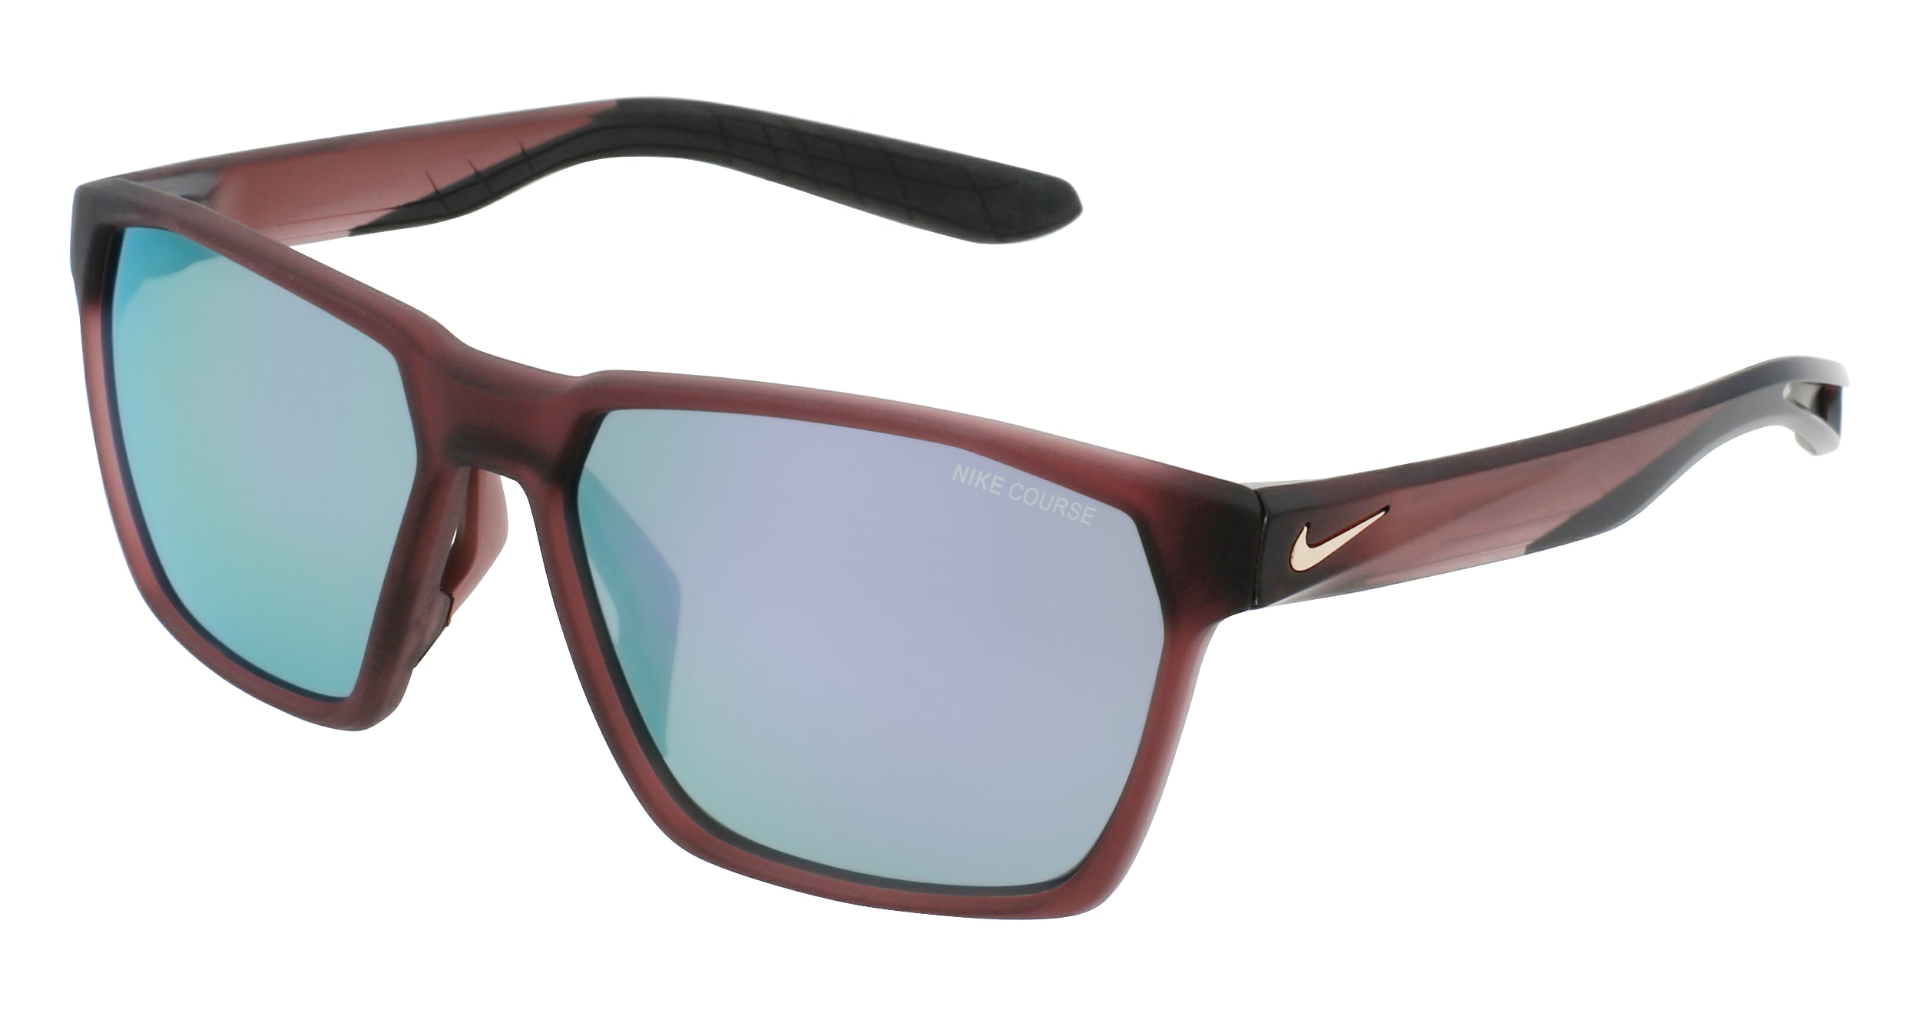 nike maverick small sunglasses in burgundy with blue lenses